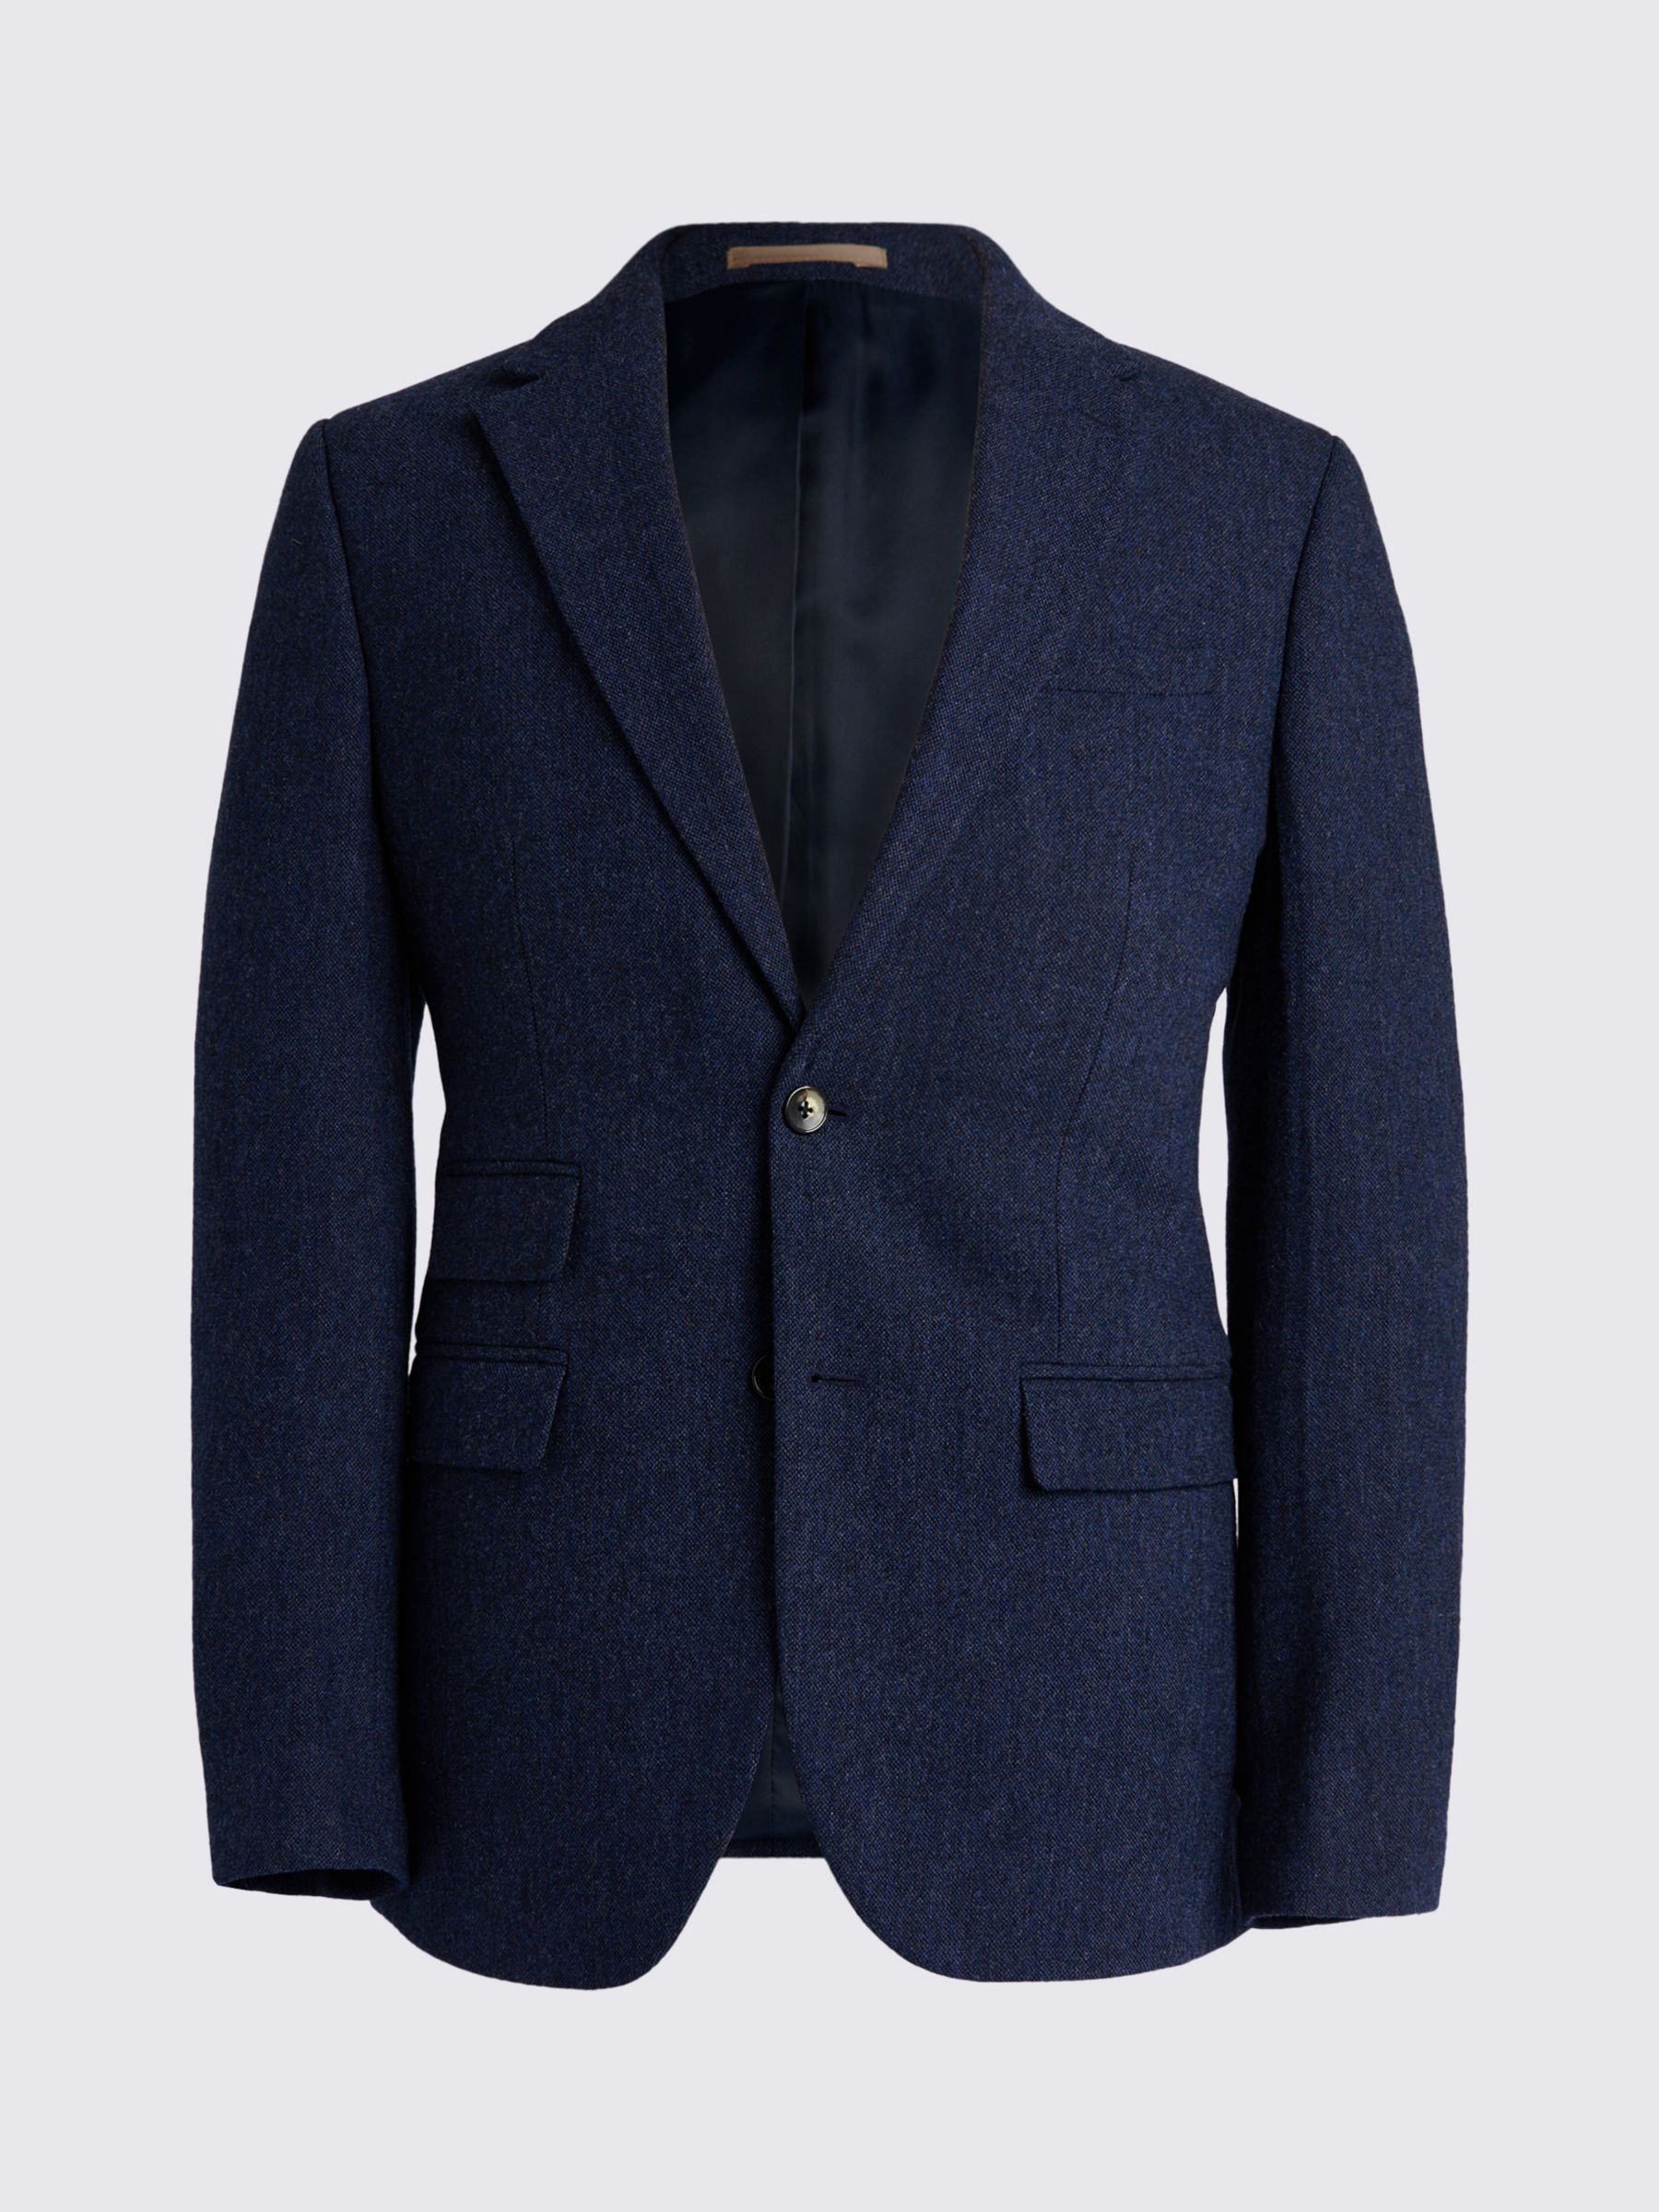 Buy Moss Slim Fit Donegal Tweed Jacket Online at johnlewis.com